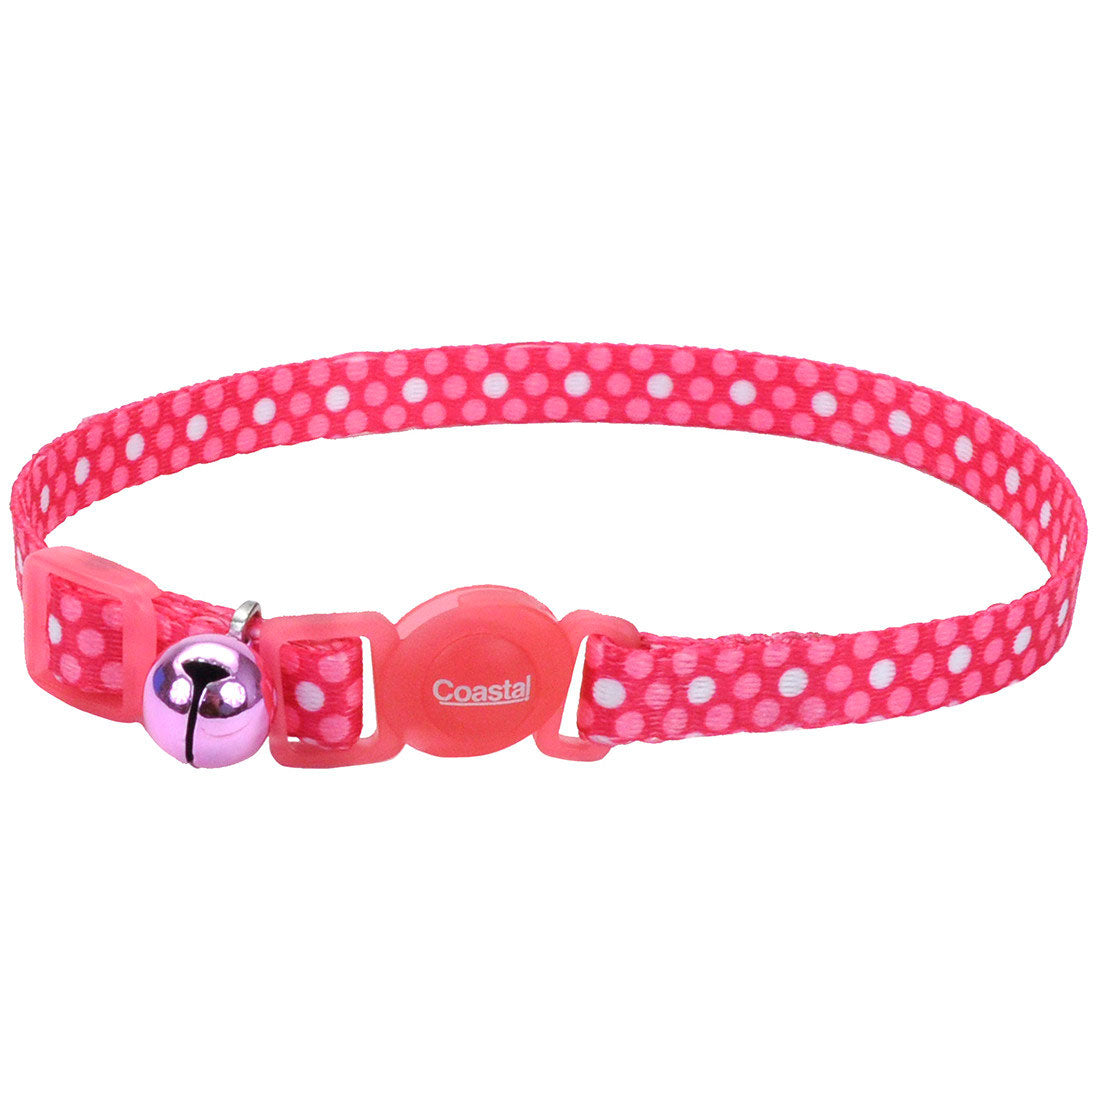 Coastal Fashion Collar Pink Dots - Collares para Gatos